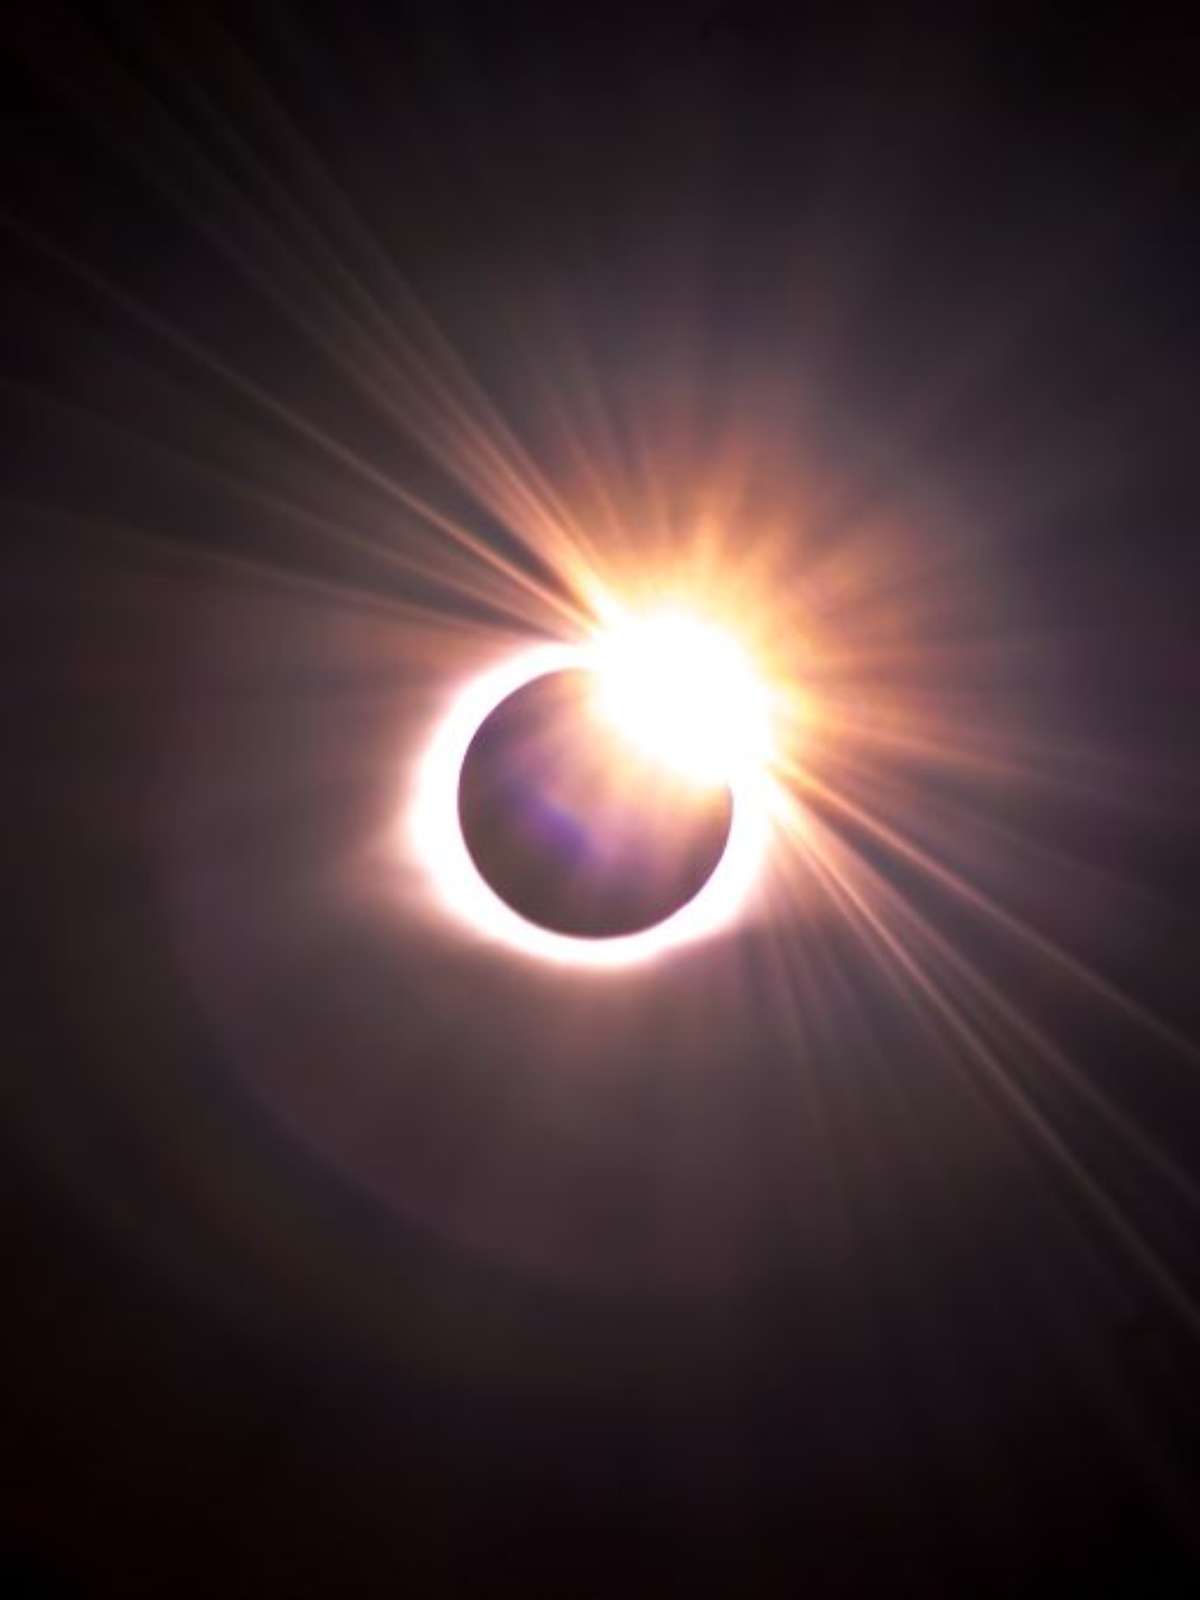 https://p2.trrsf.com/image/fget/cf/1200/1600/middle/images.terra.com/2020/12/10/eclipse-solar-14-dezembro-2020.jpg